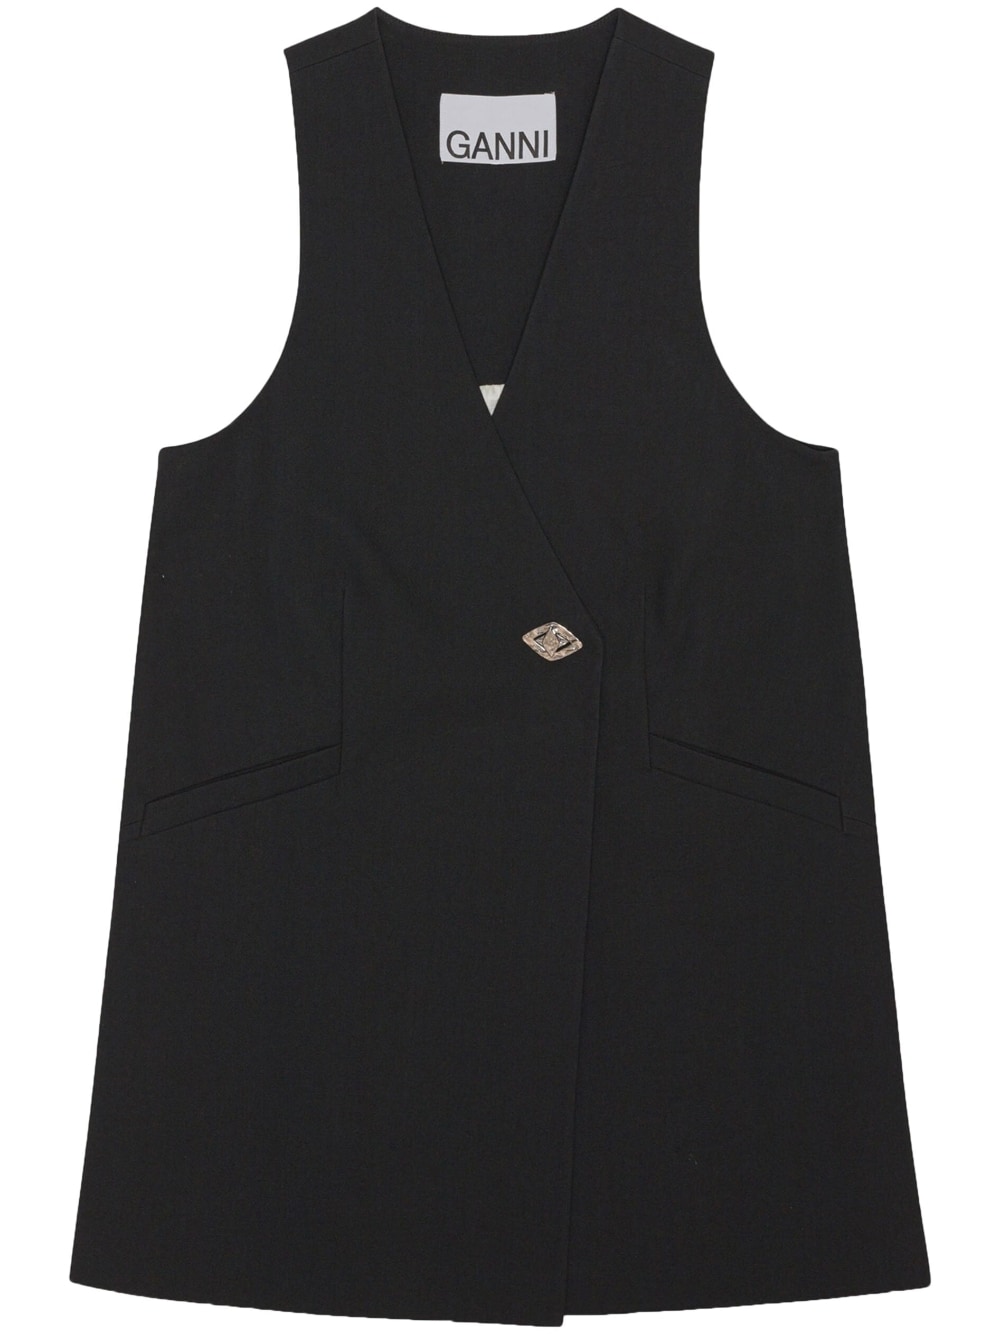 GANNI sleeveless blazer dress - Black